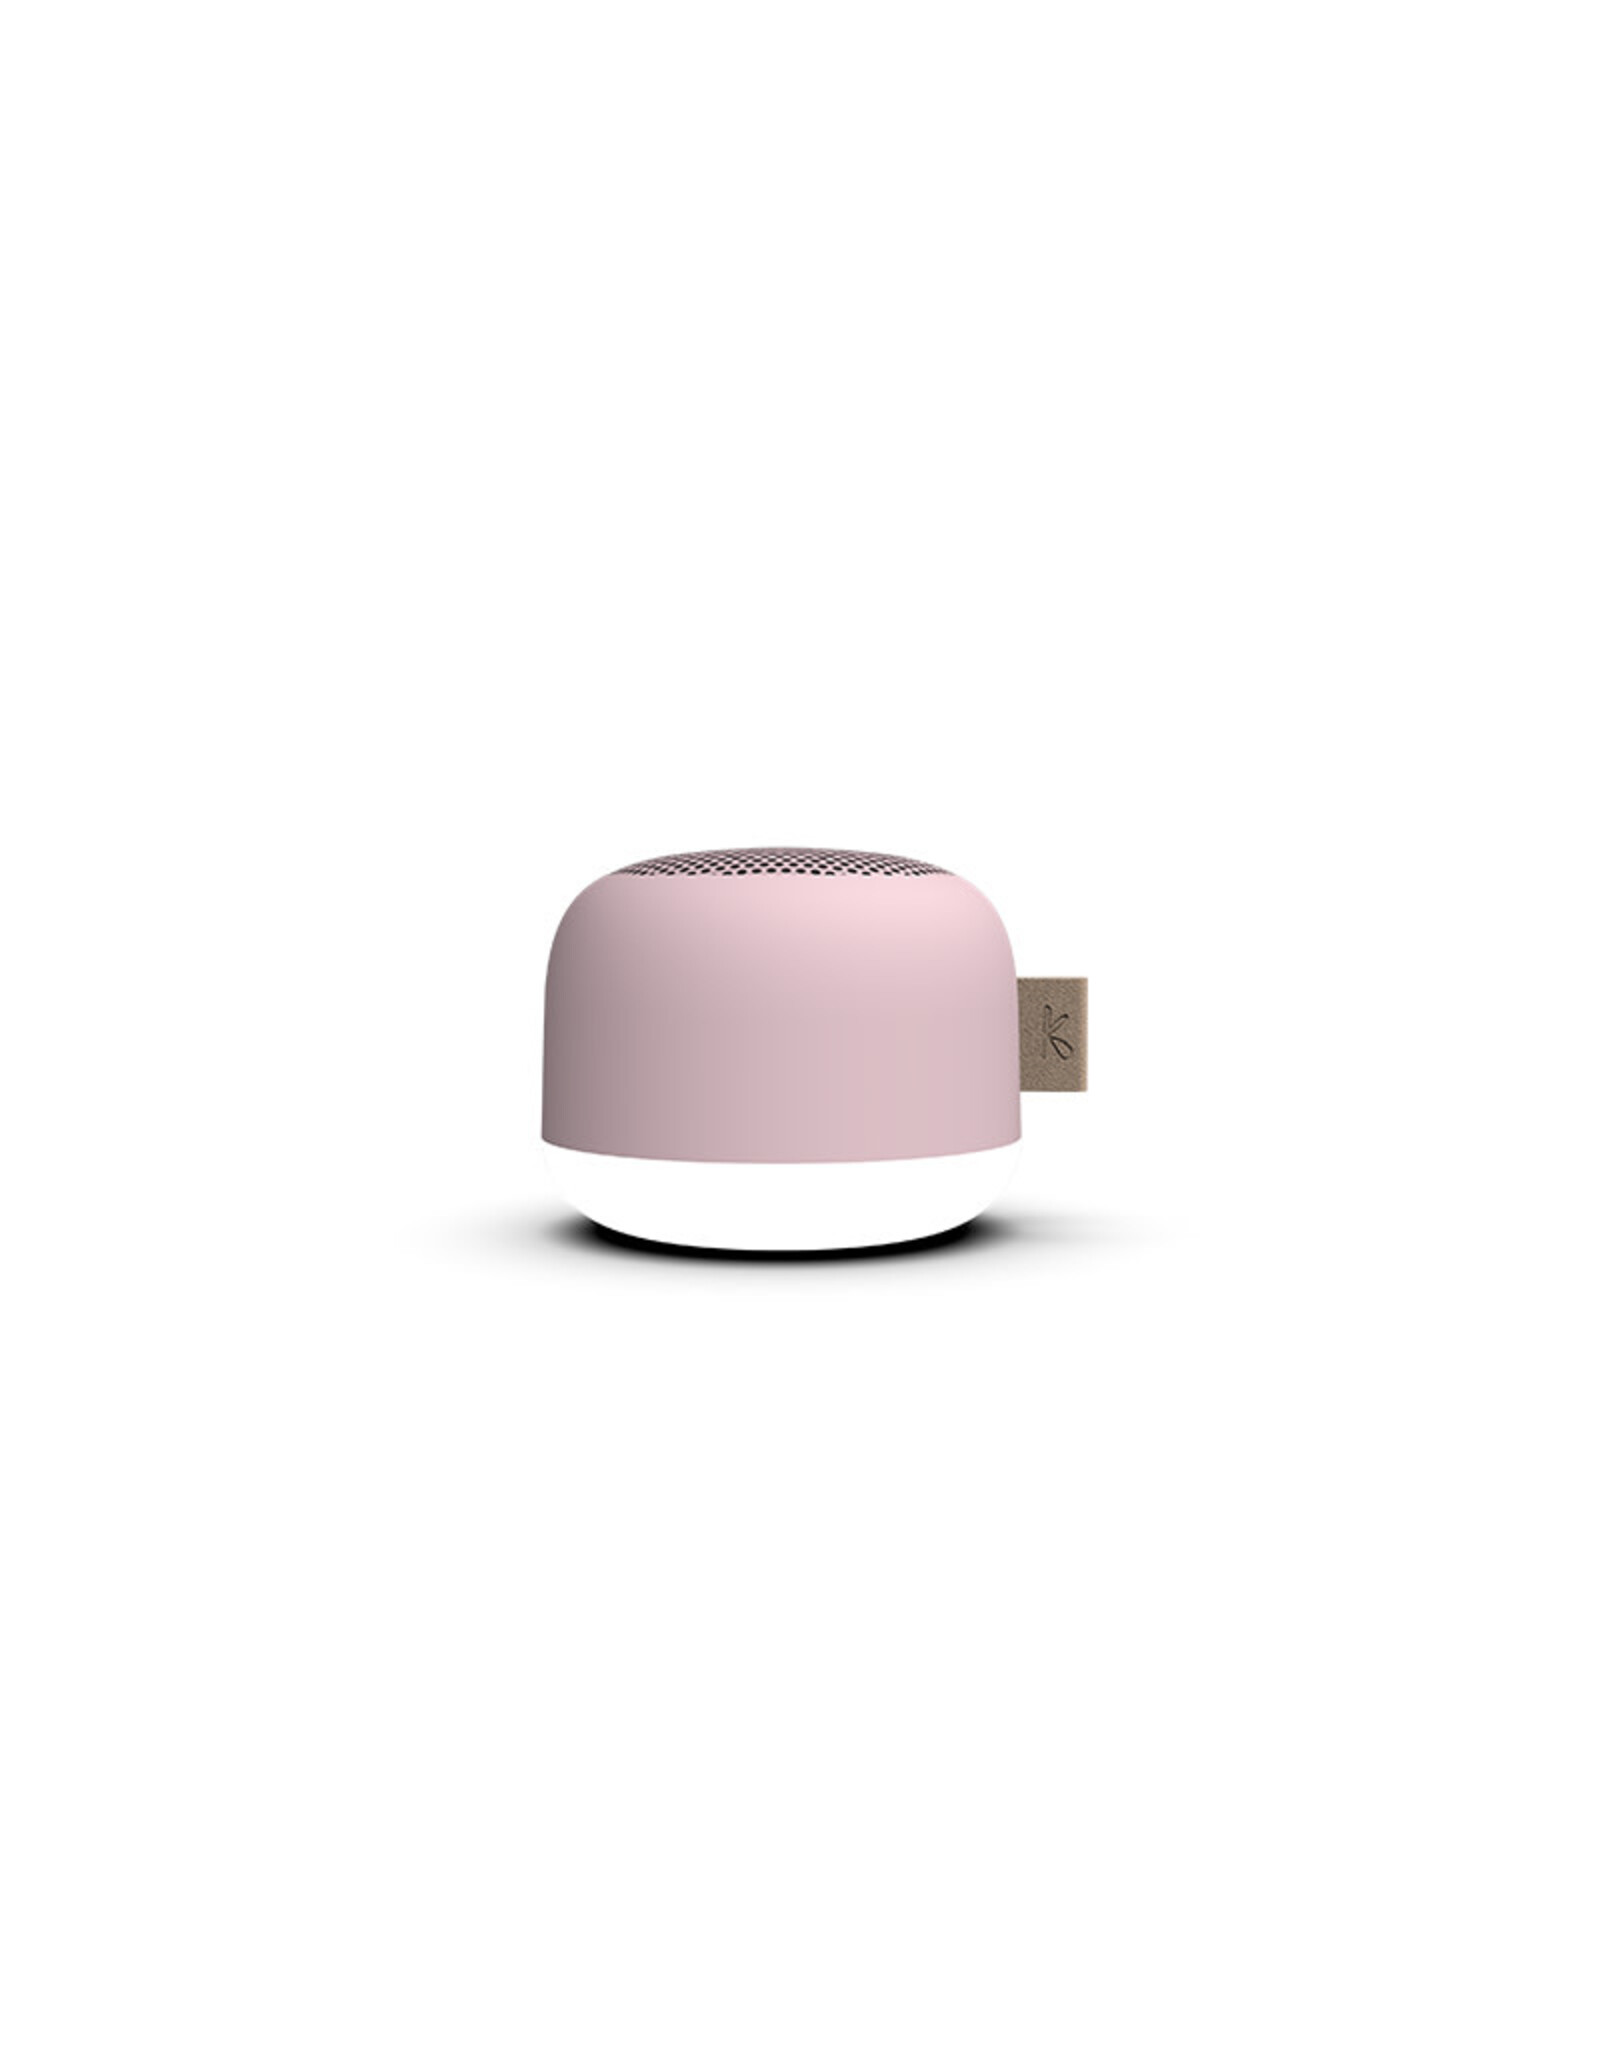 Kreafunk aLight Bluetooth Speaker with Light - Dusty Rose